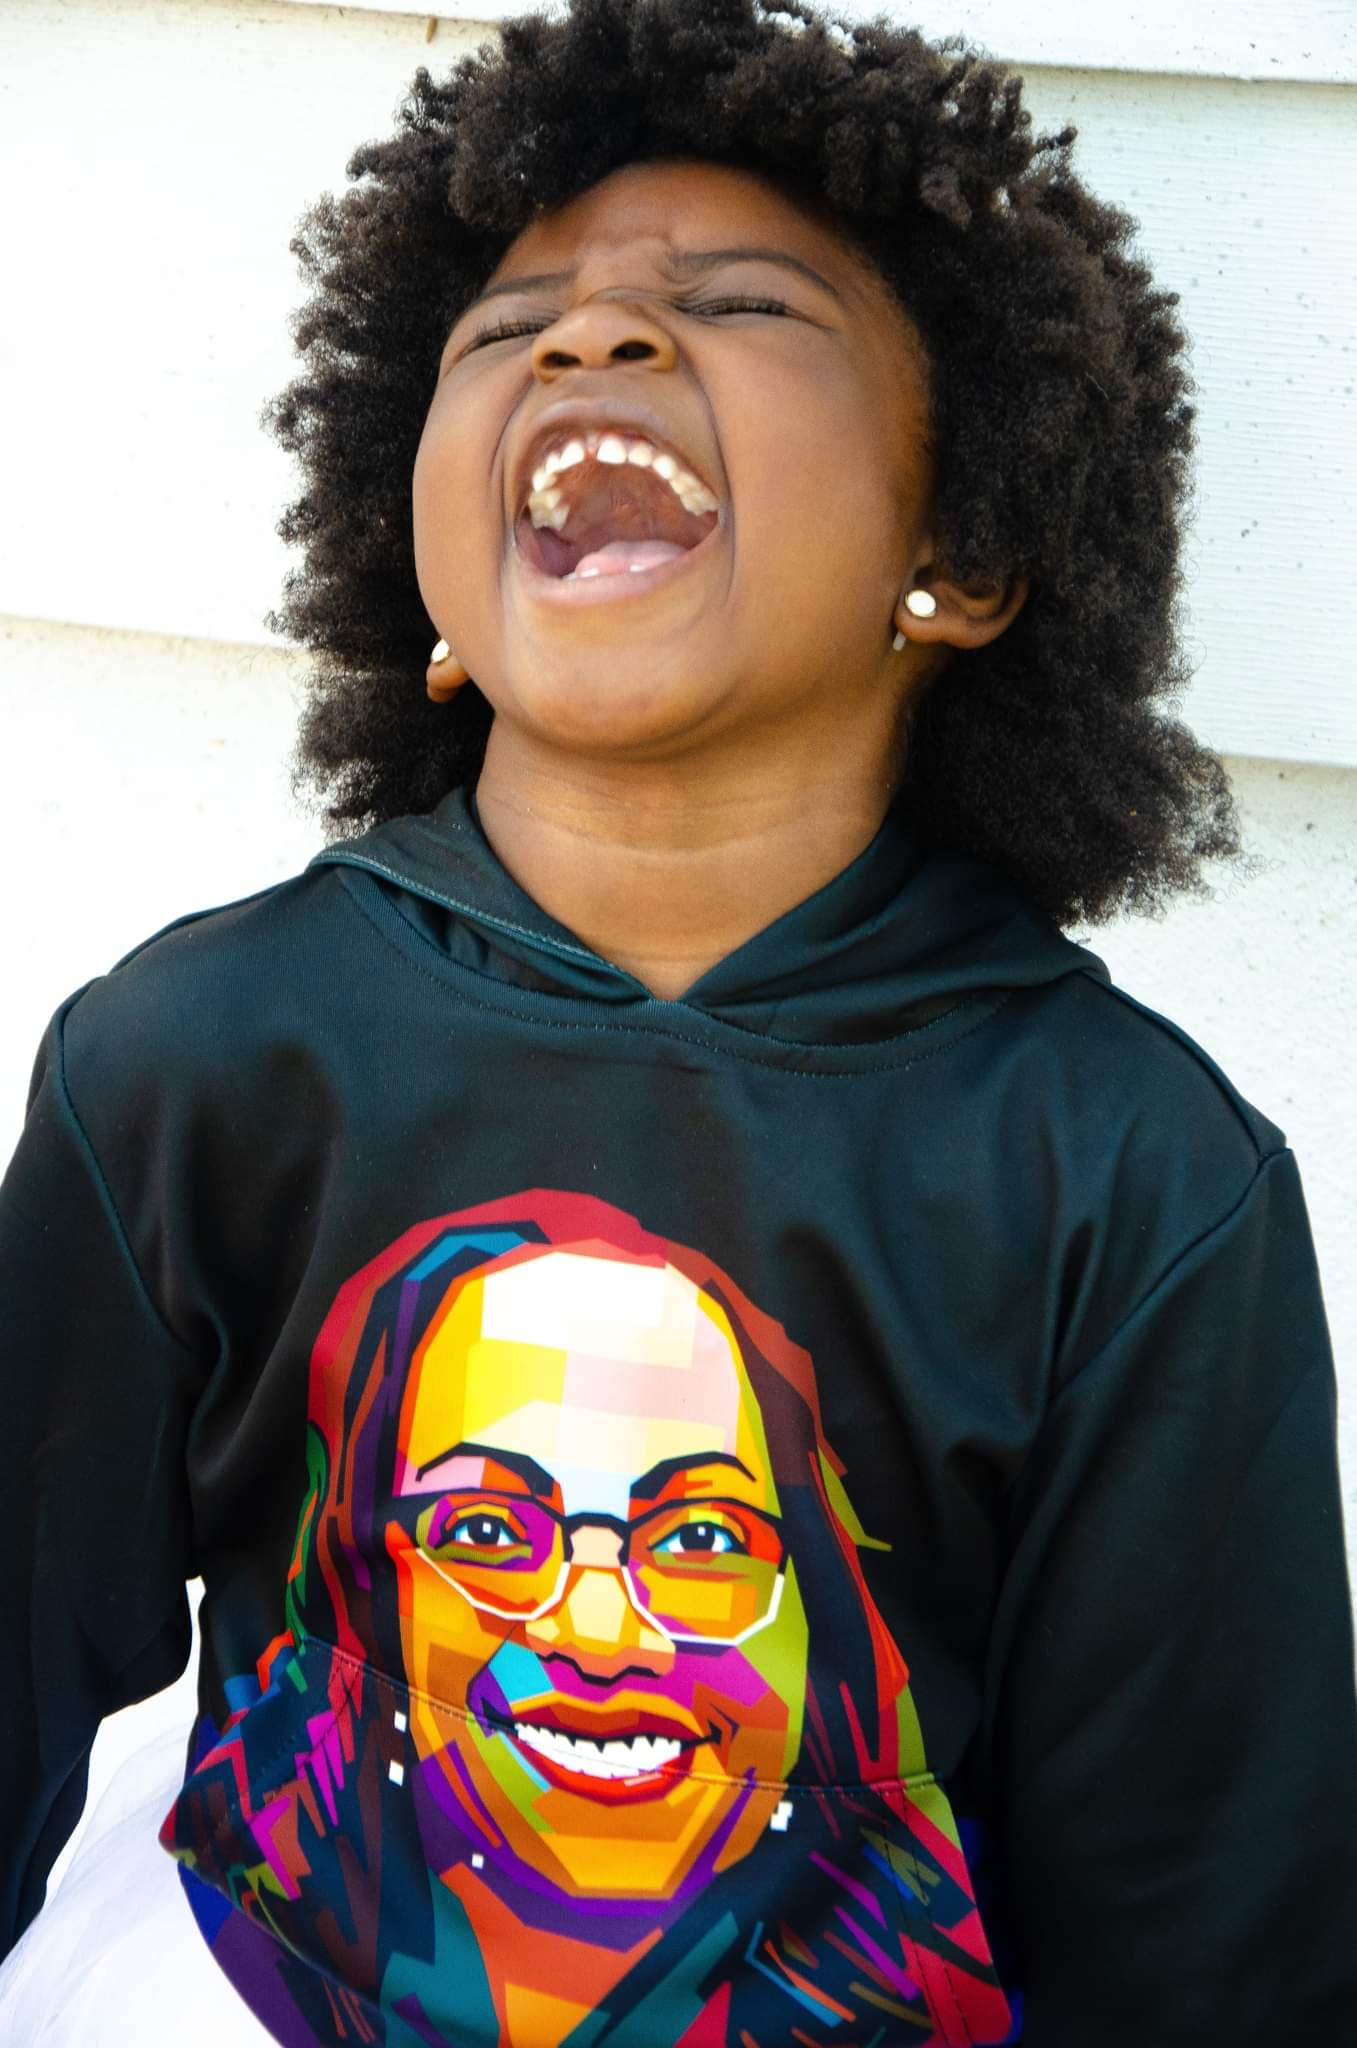 Judge Ketanji Brown Jackson Black Girl Hoodie-clothing and culture-shop here at-A Perfect Shirt